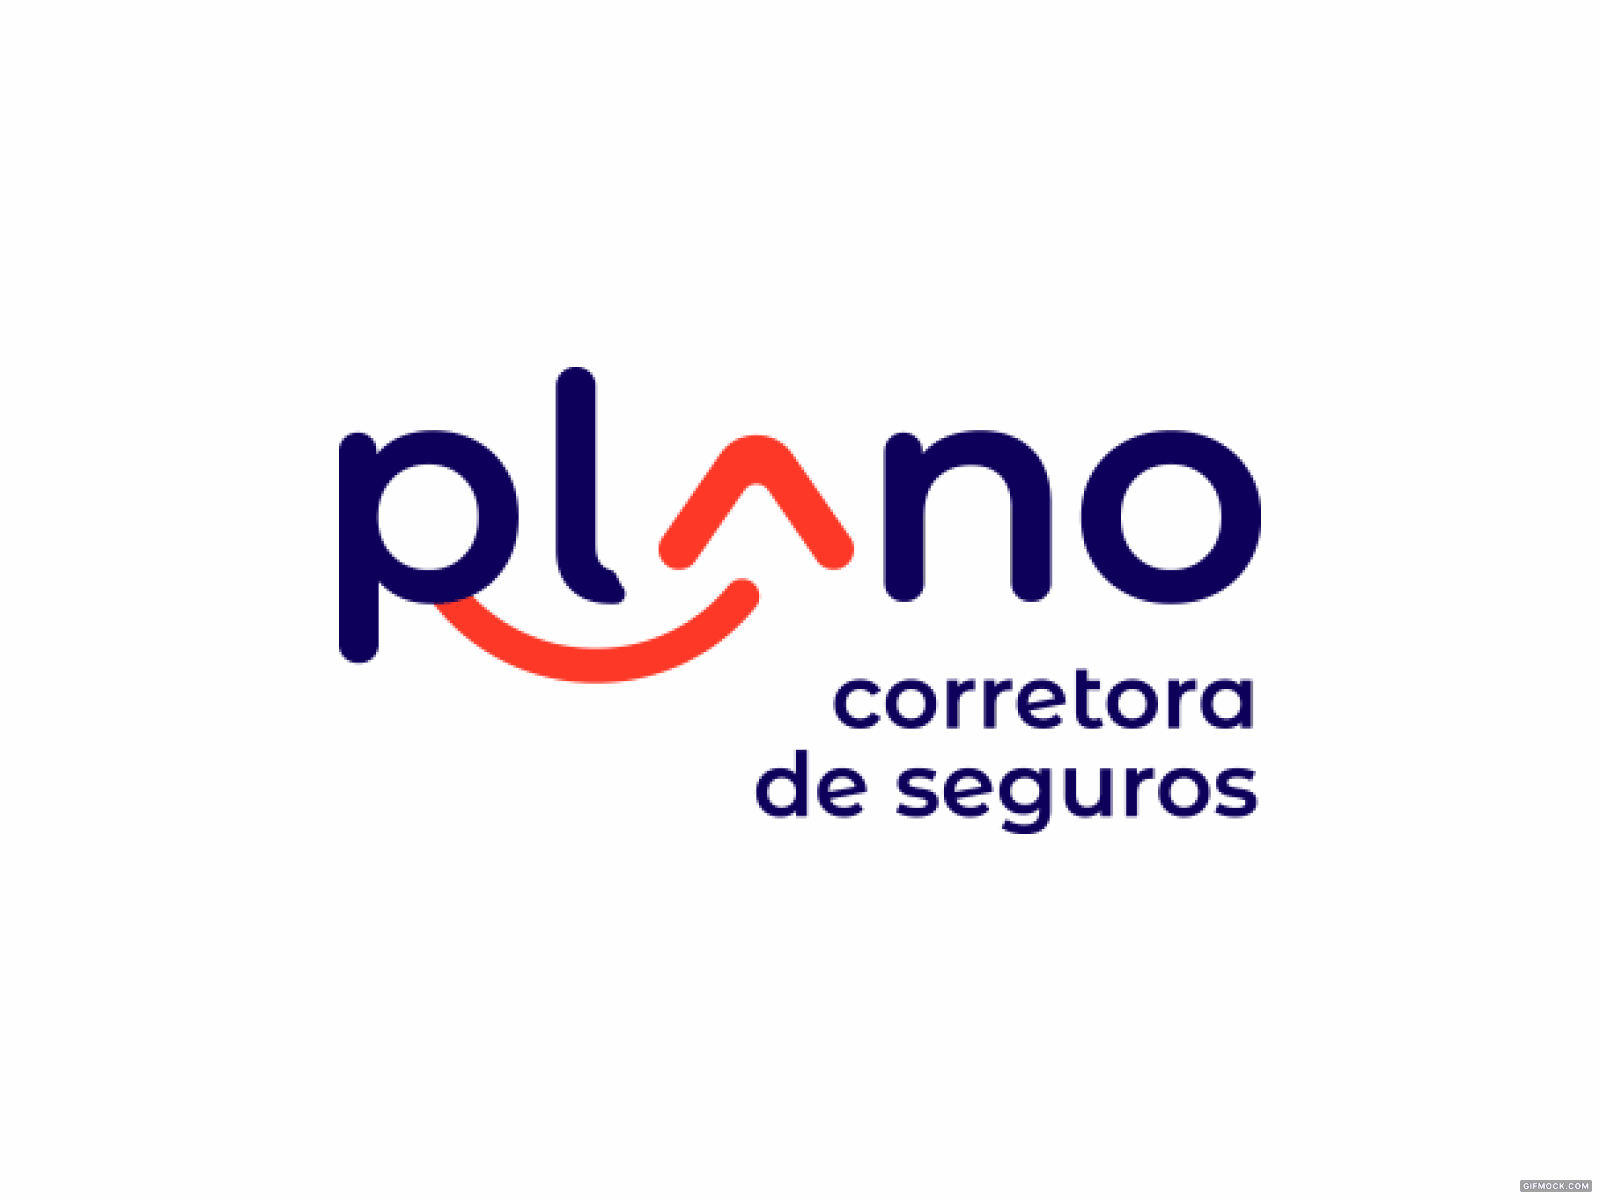 Logo design | Corporate